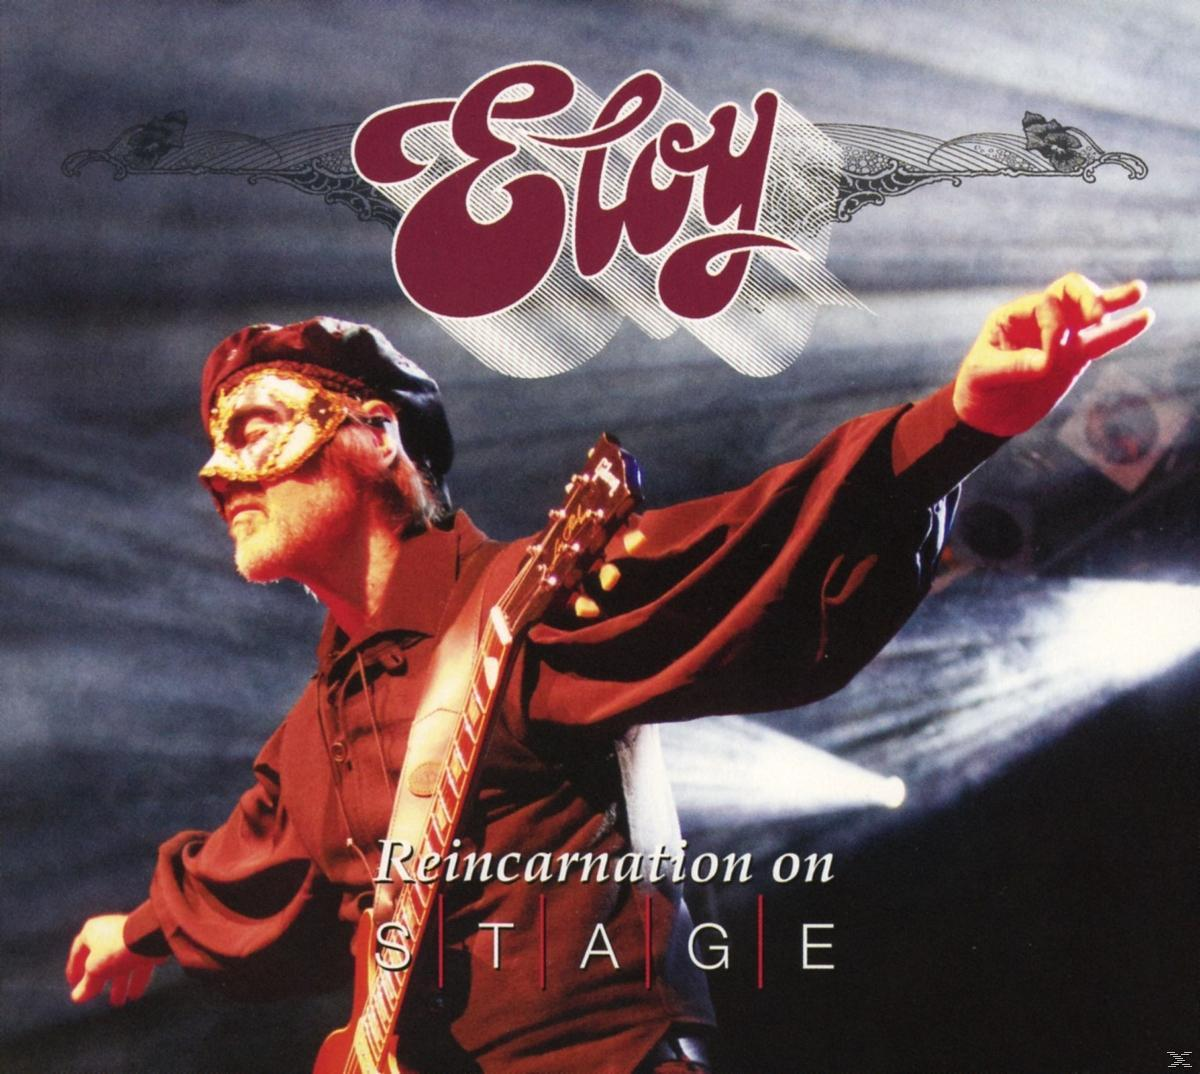 Eloy - Reincarnation On Stage (Live) (CD) 